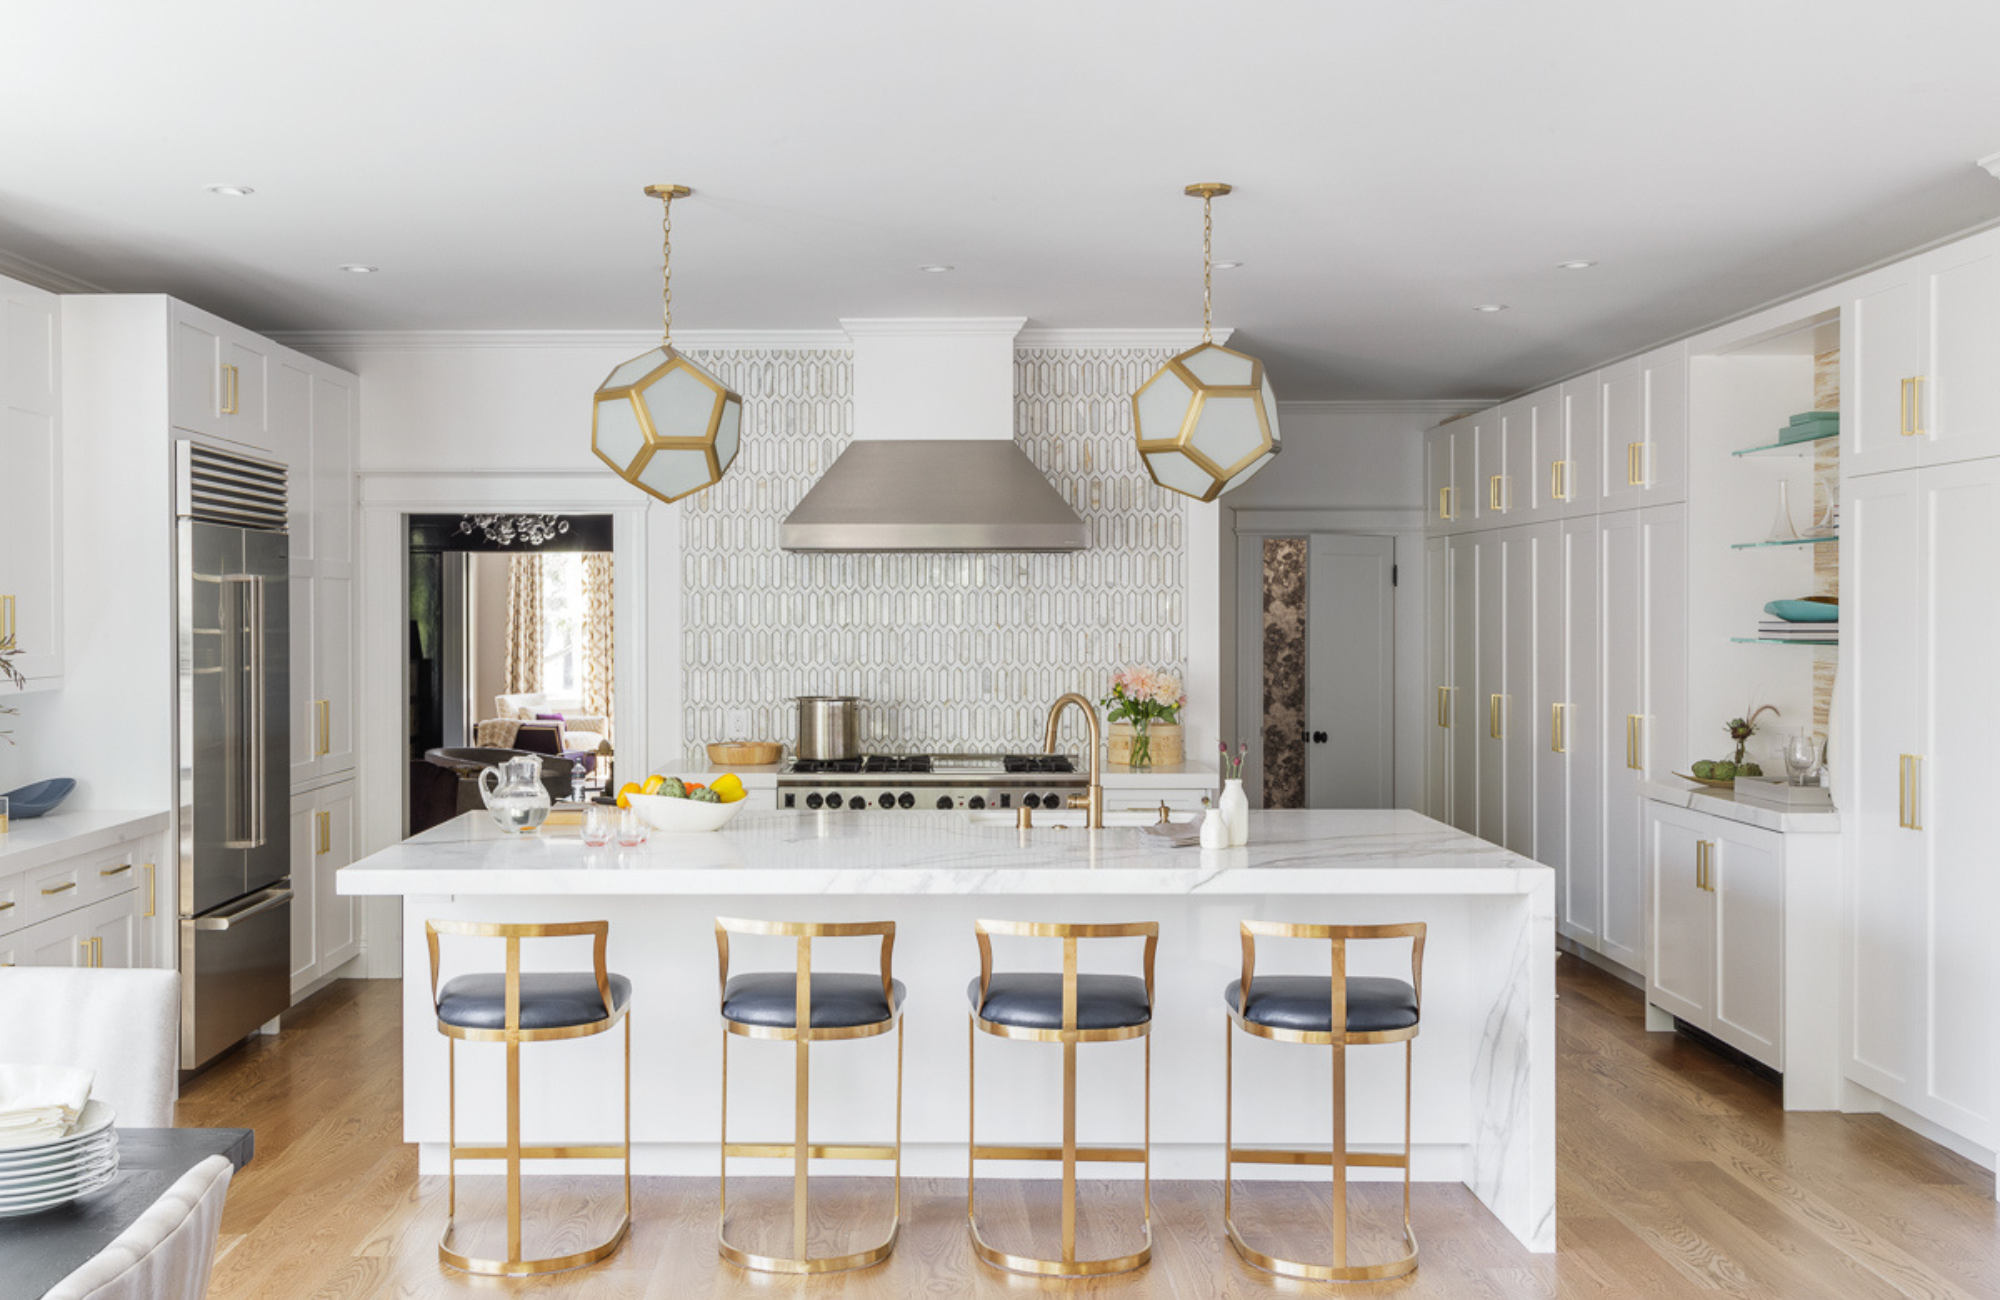 coddington-design-san-francisco-ca-interior-designer-insights-for-purchasing-home-high-end-kitchen-marble-counters-custom-cabinetry-tile-backsplash-brass-accents-luxury-interior-design